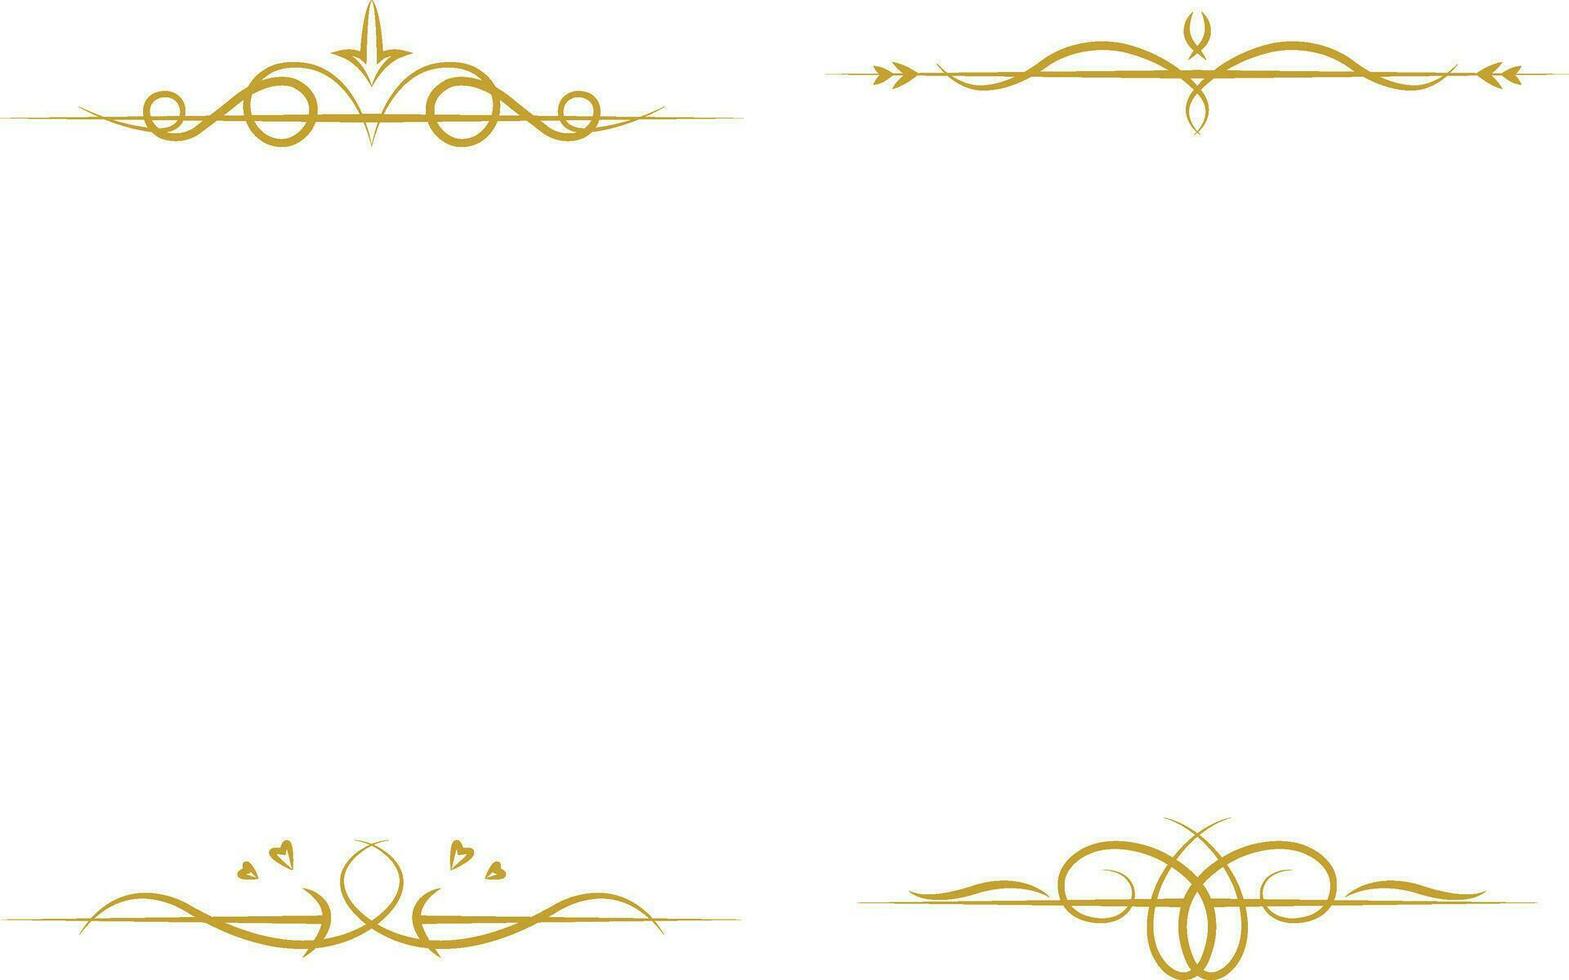 lujo divisor dorado filigrana divisores florido remolino fronteras vector aislado oro lujoso separadores clásico Boda invitación.vector Pro